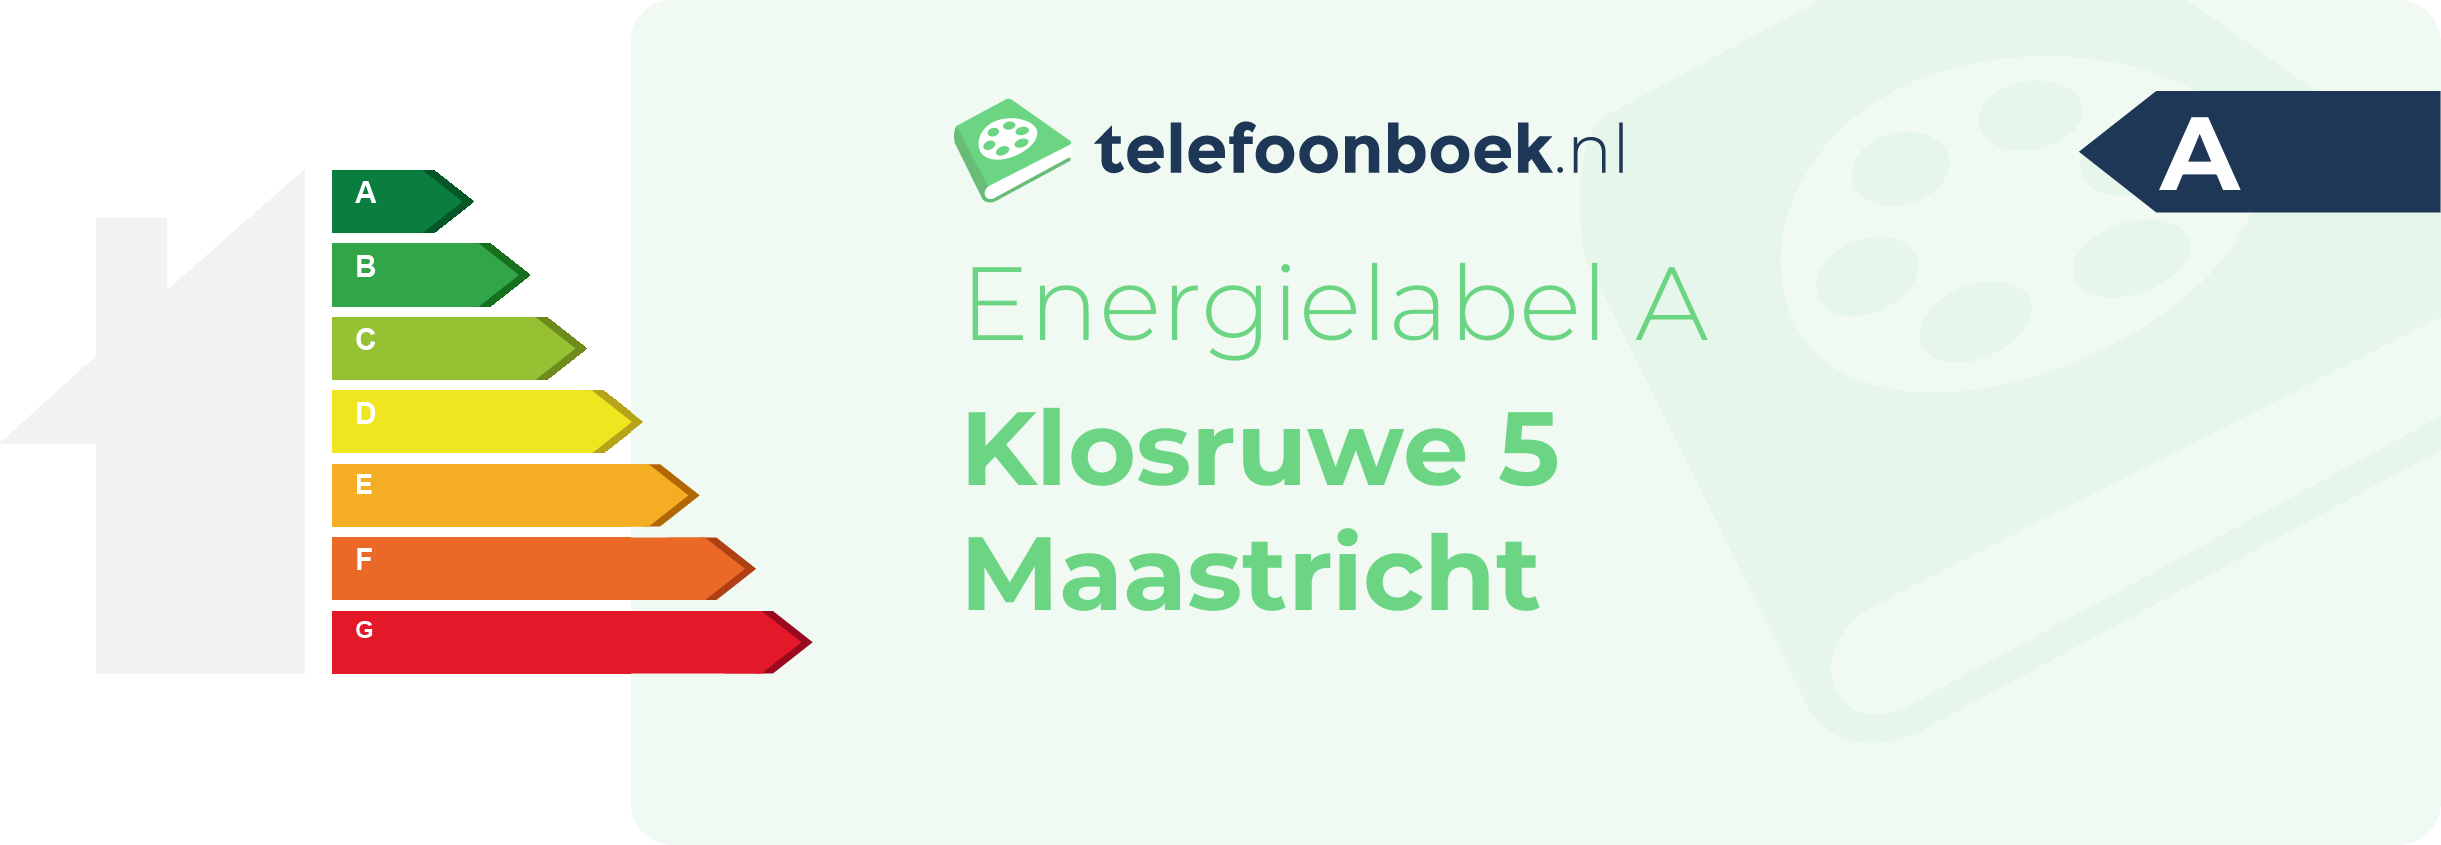 Energielabel Klosruwe 5 Maastricht